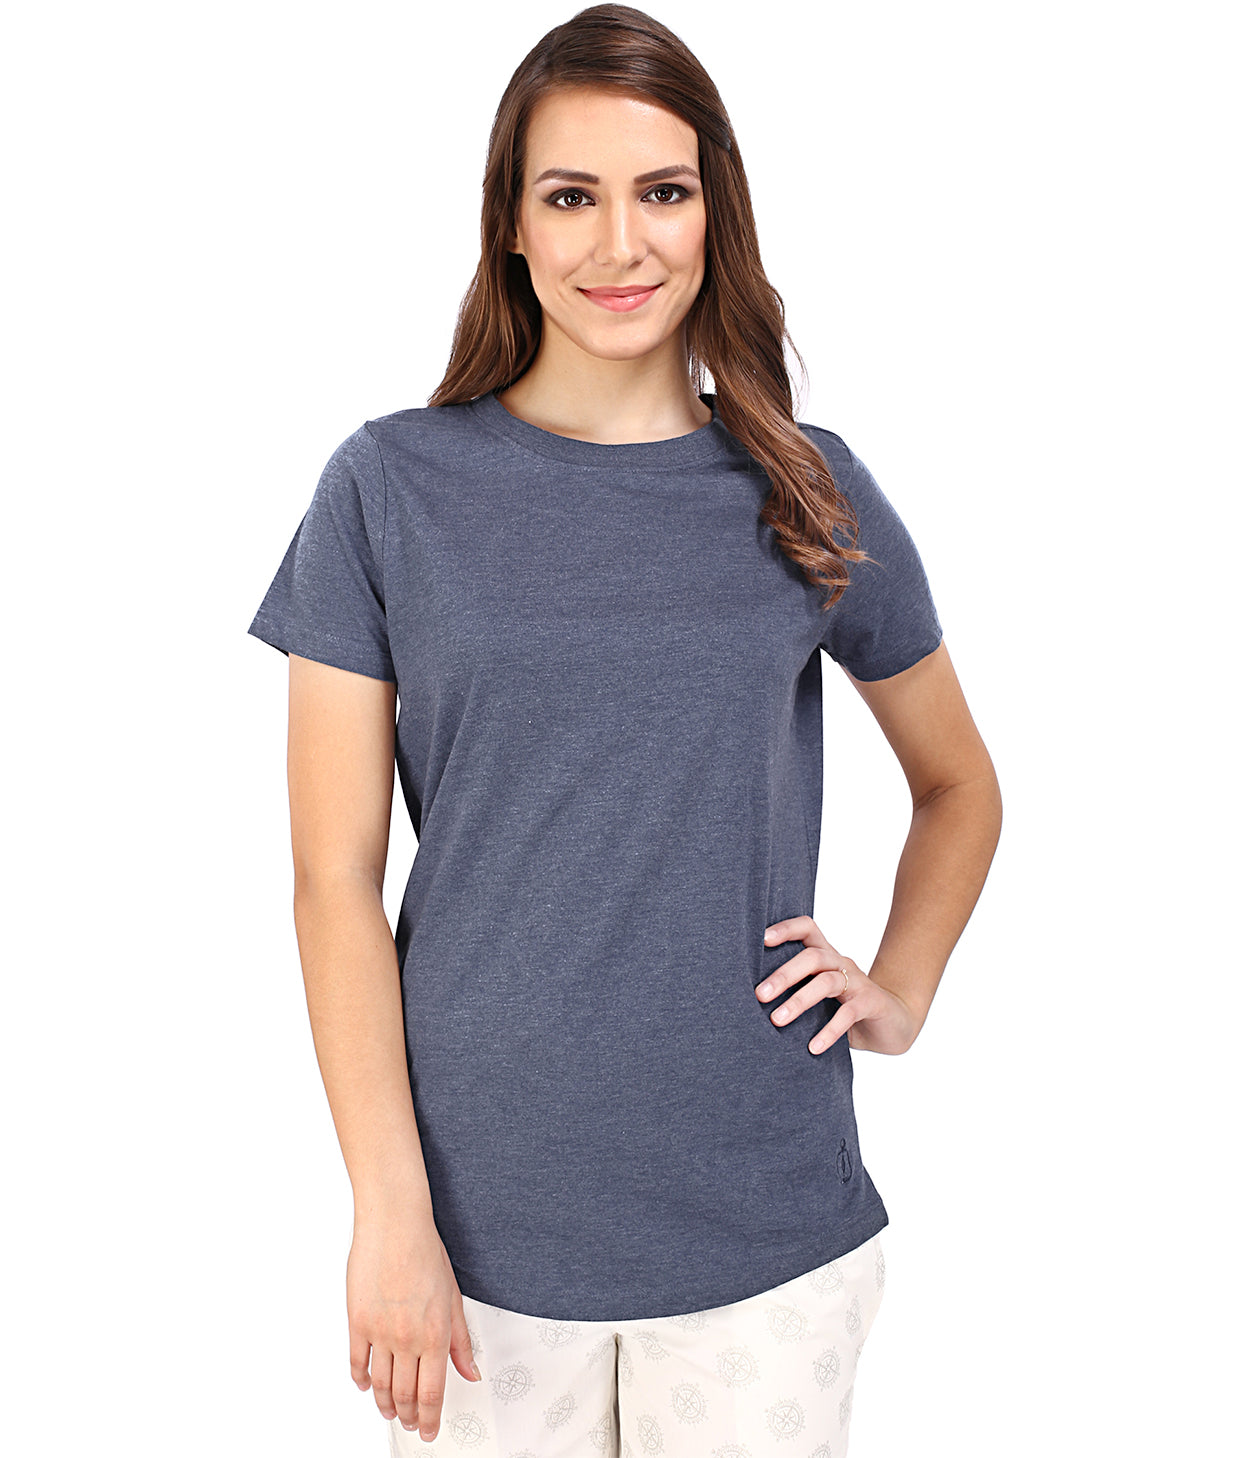 Navy Melange Womens T-Shirt